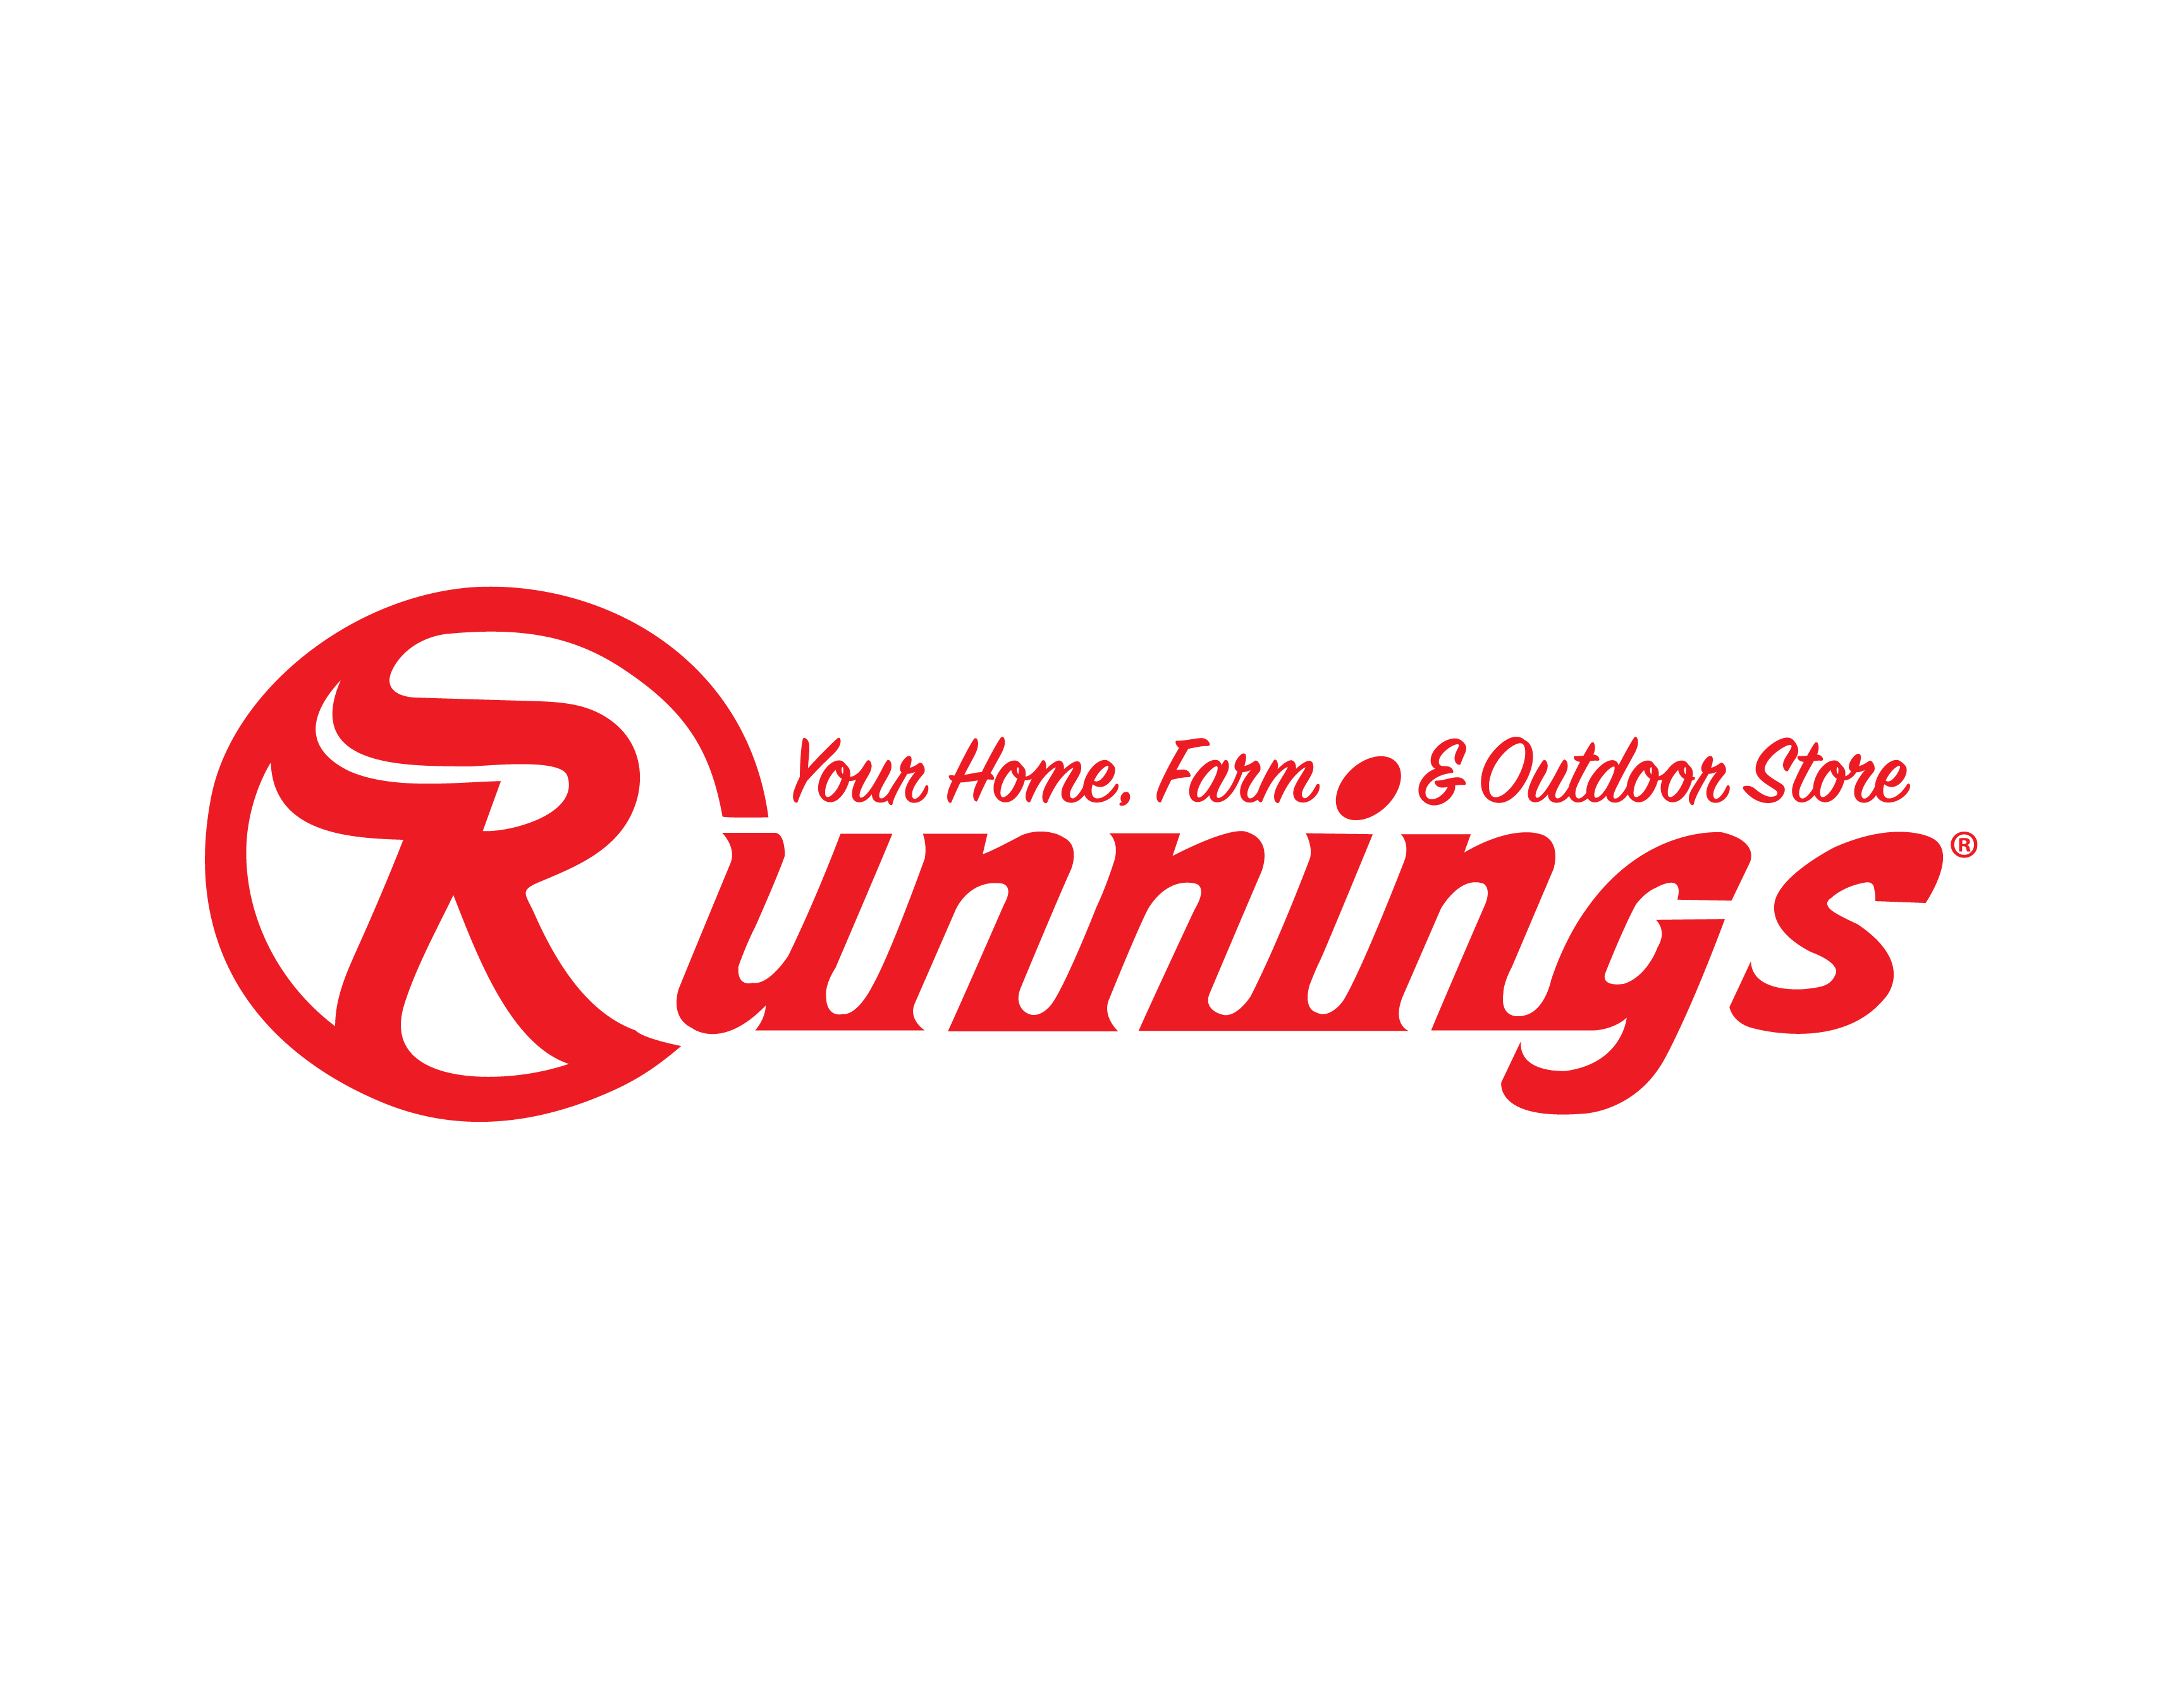 Runnings